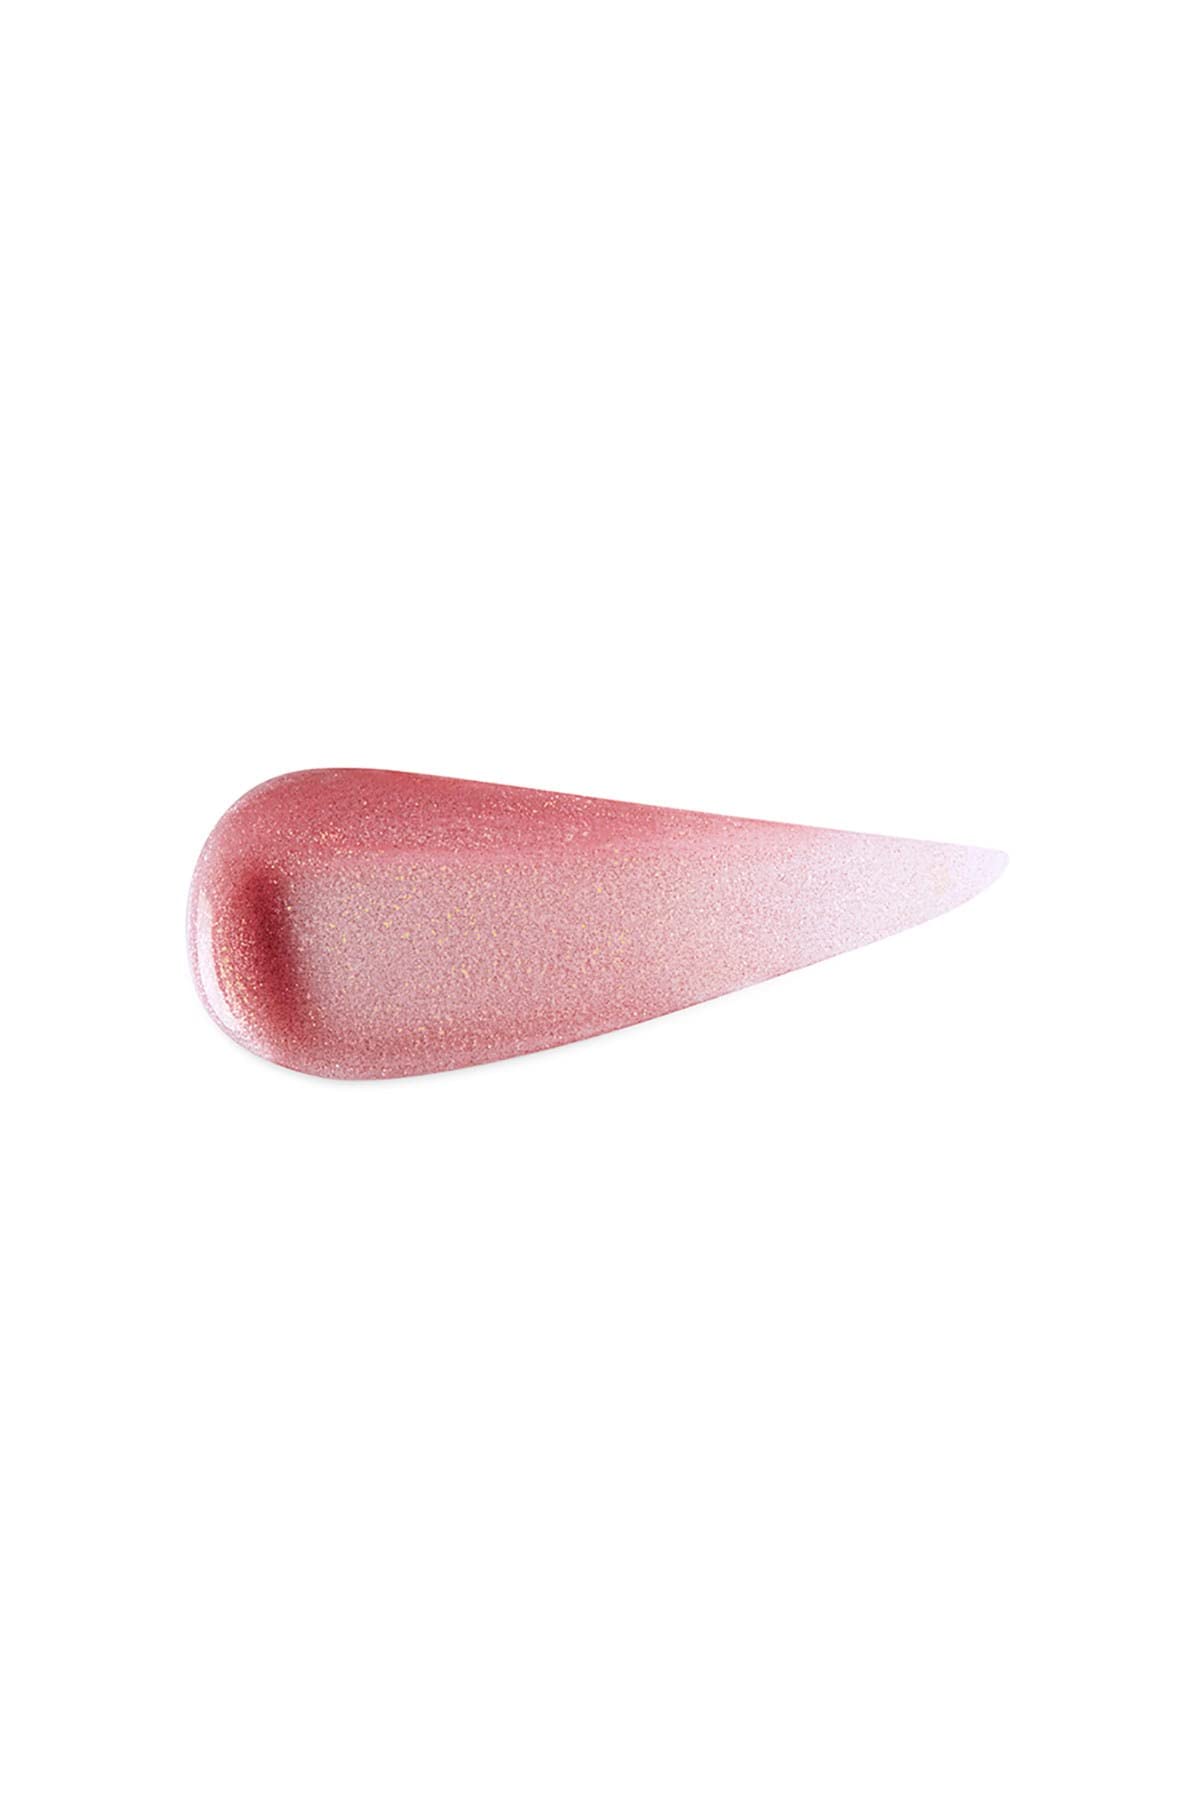 Kiko Milano 3d Hydra Lipgloss 17 | Softening Lip Gloss For A 3d Look